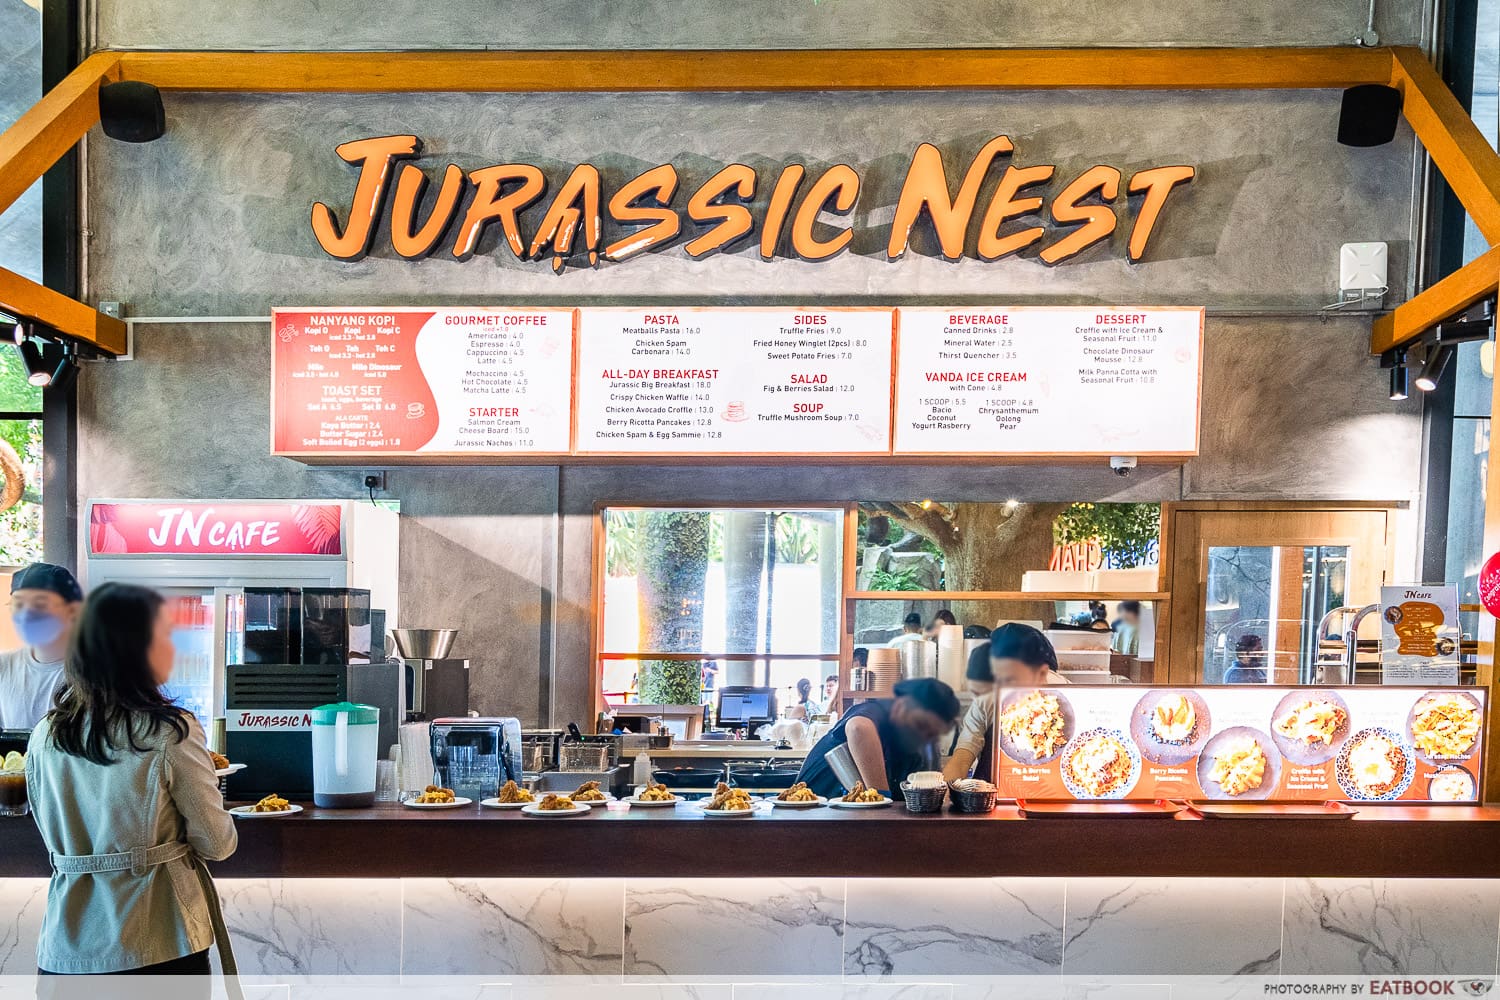 jurassic nest gbtb - jurassic nest cafe storefront